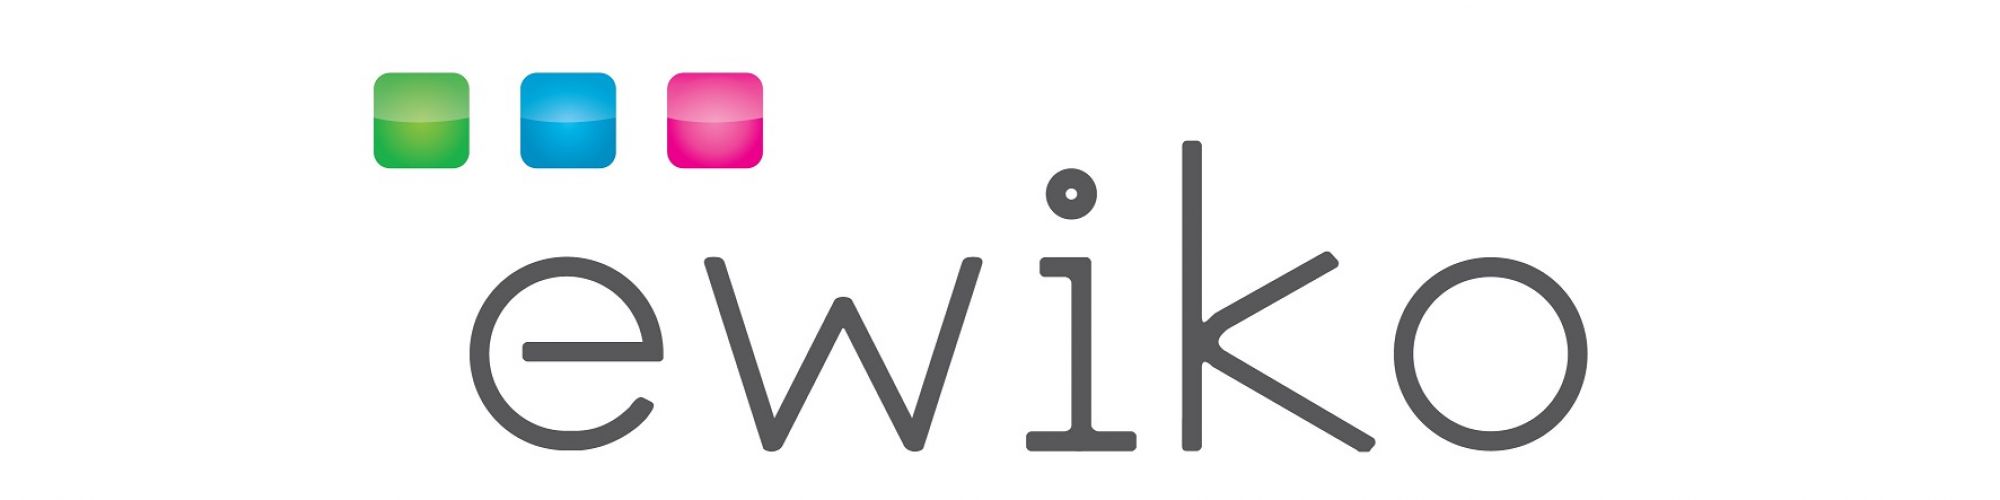 ewiko Personal GmbH